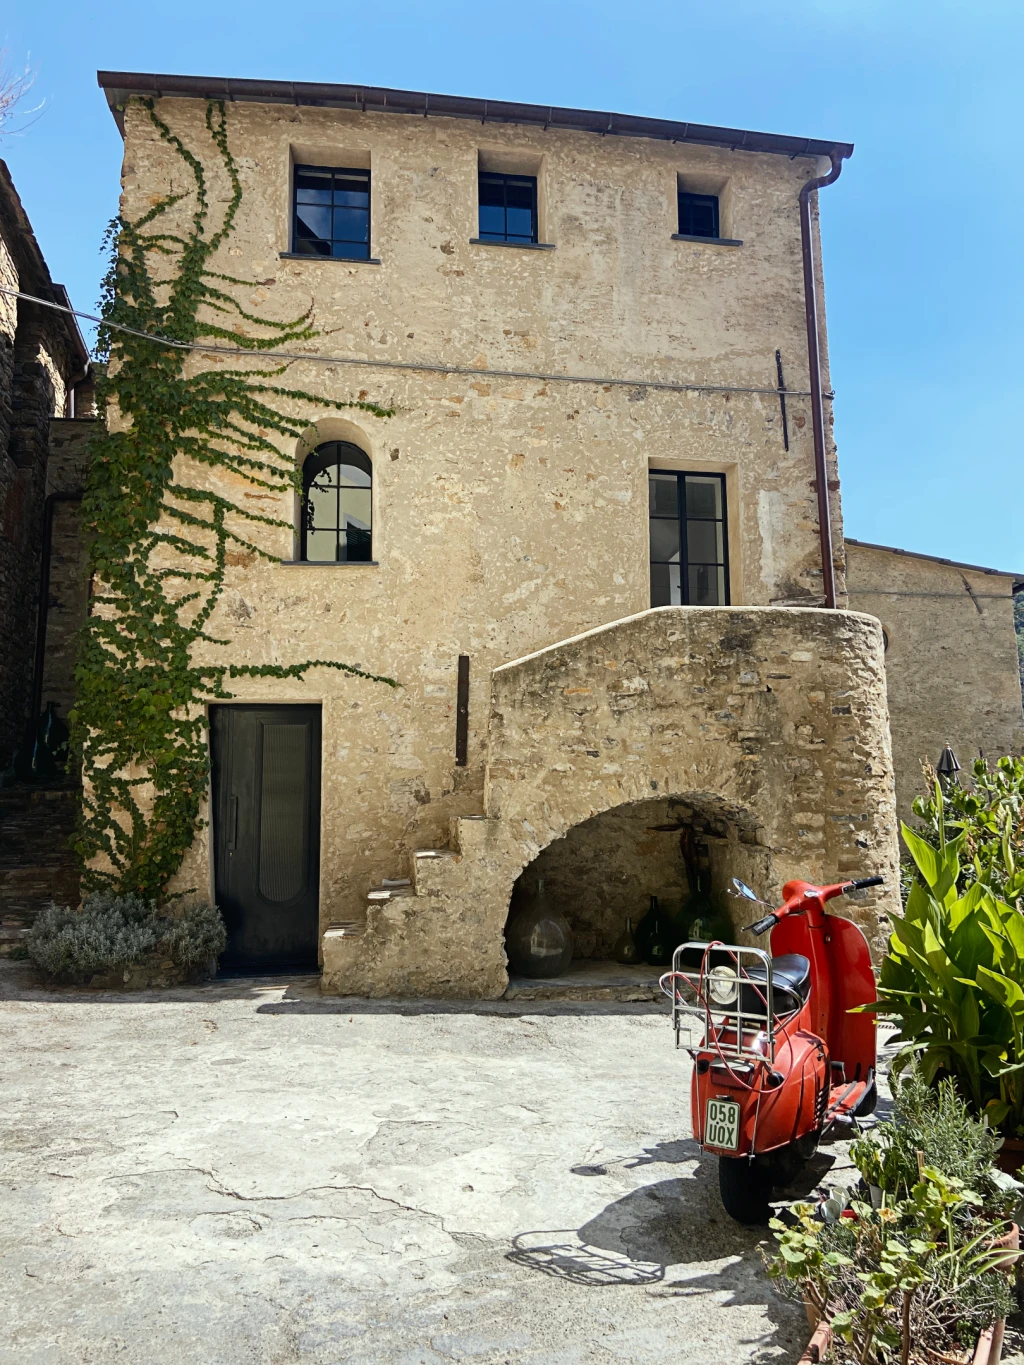 The completely restored villa house in Montegrazie, Liguria